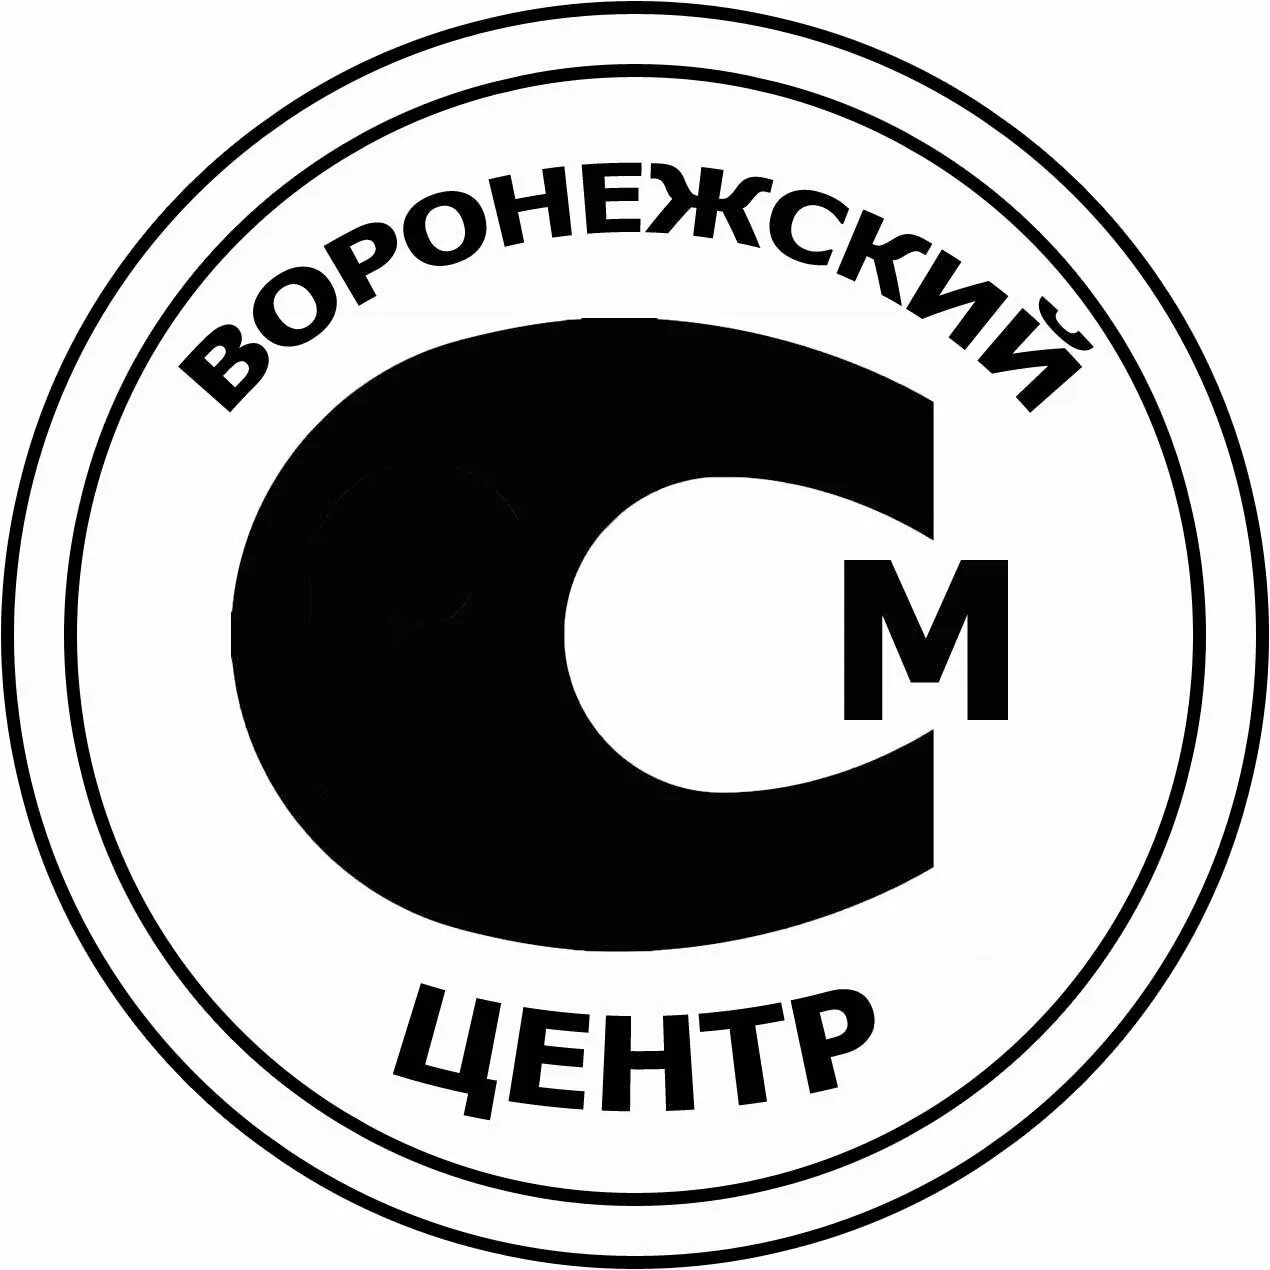 Центр сертификации логотип. Биксерт центр по сертификации лого. Значок центра сертификации ВРН.